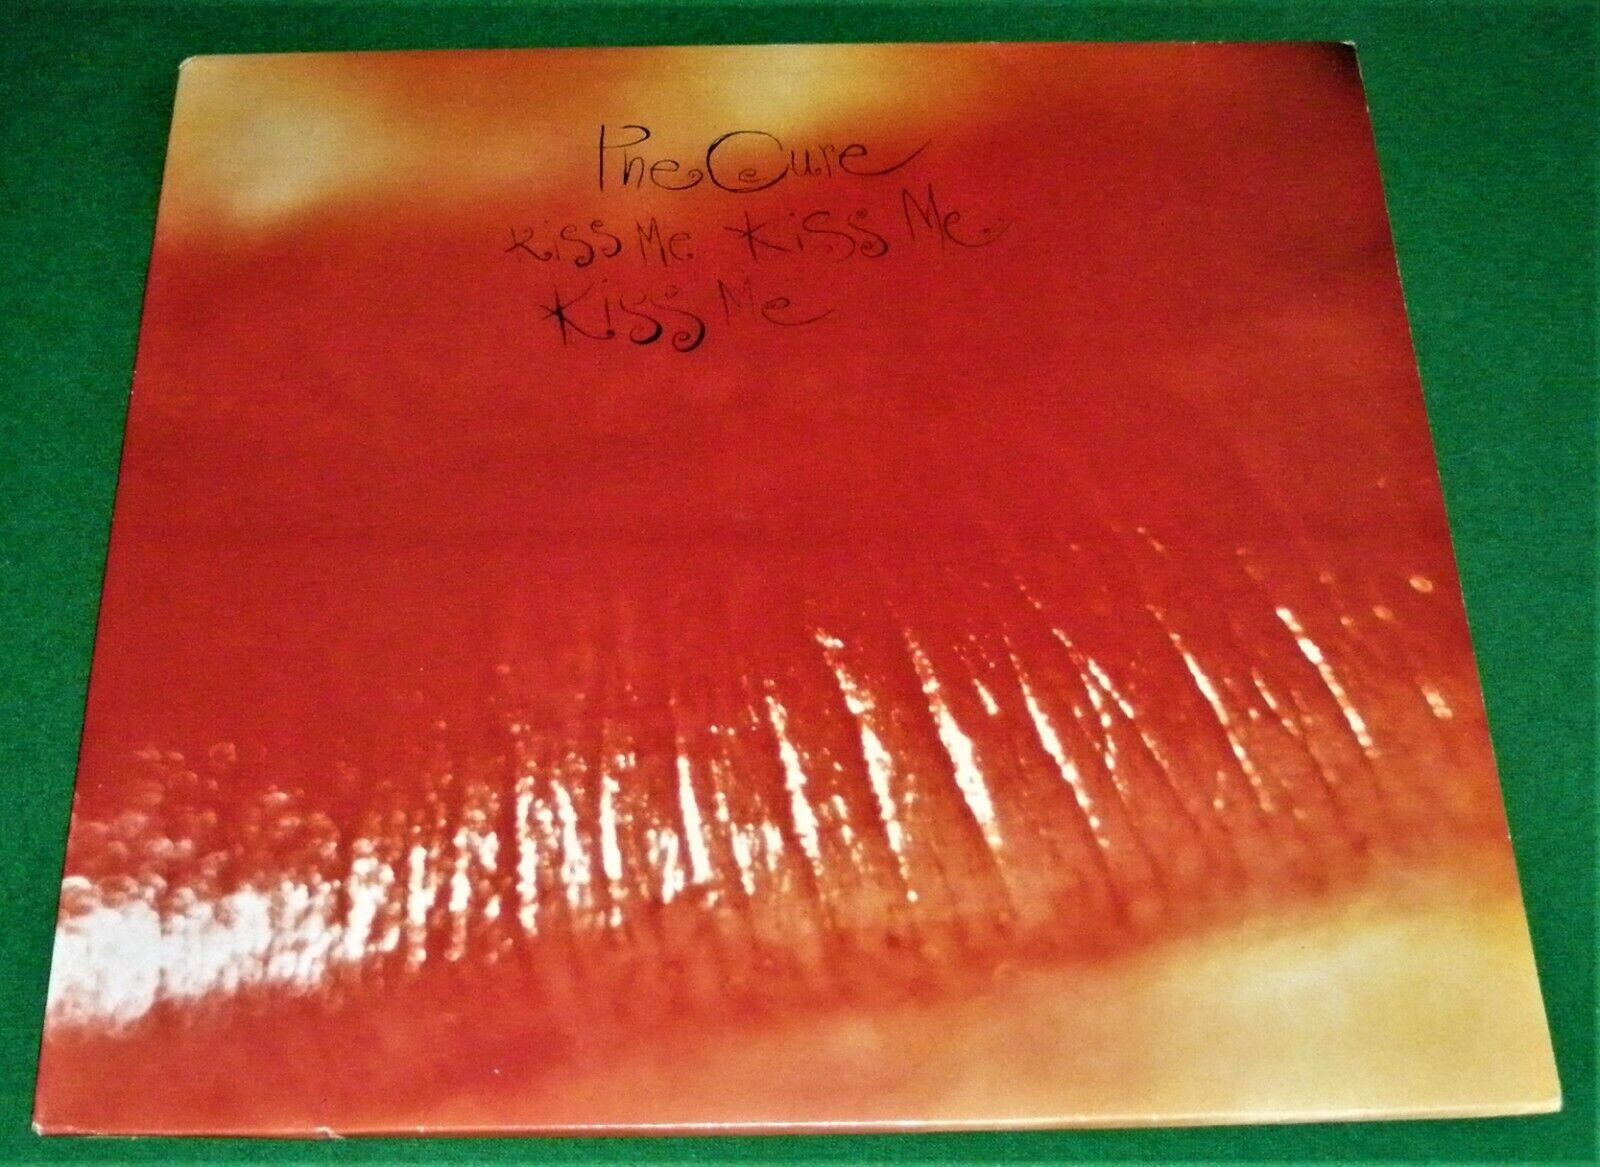 THE CURE = Kiss Me Kiss Me Kiss Me DOUBEL LP ORGINAL UK 